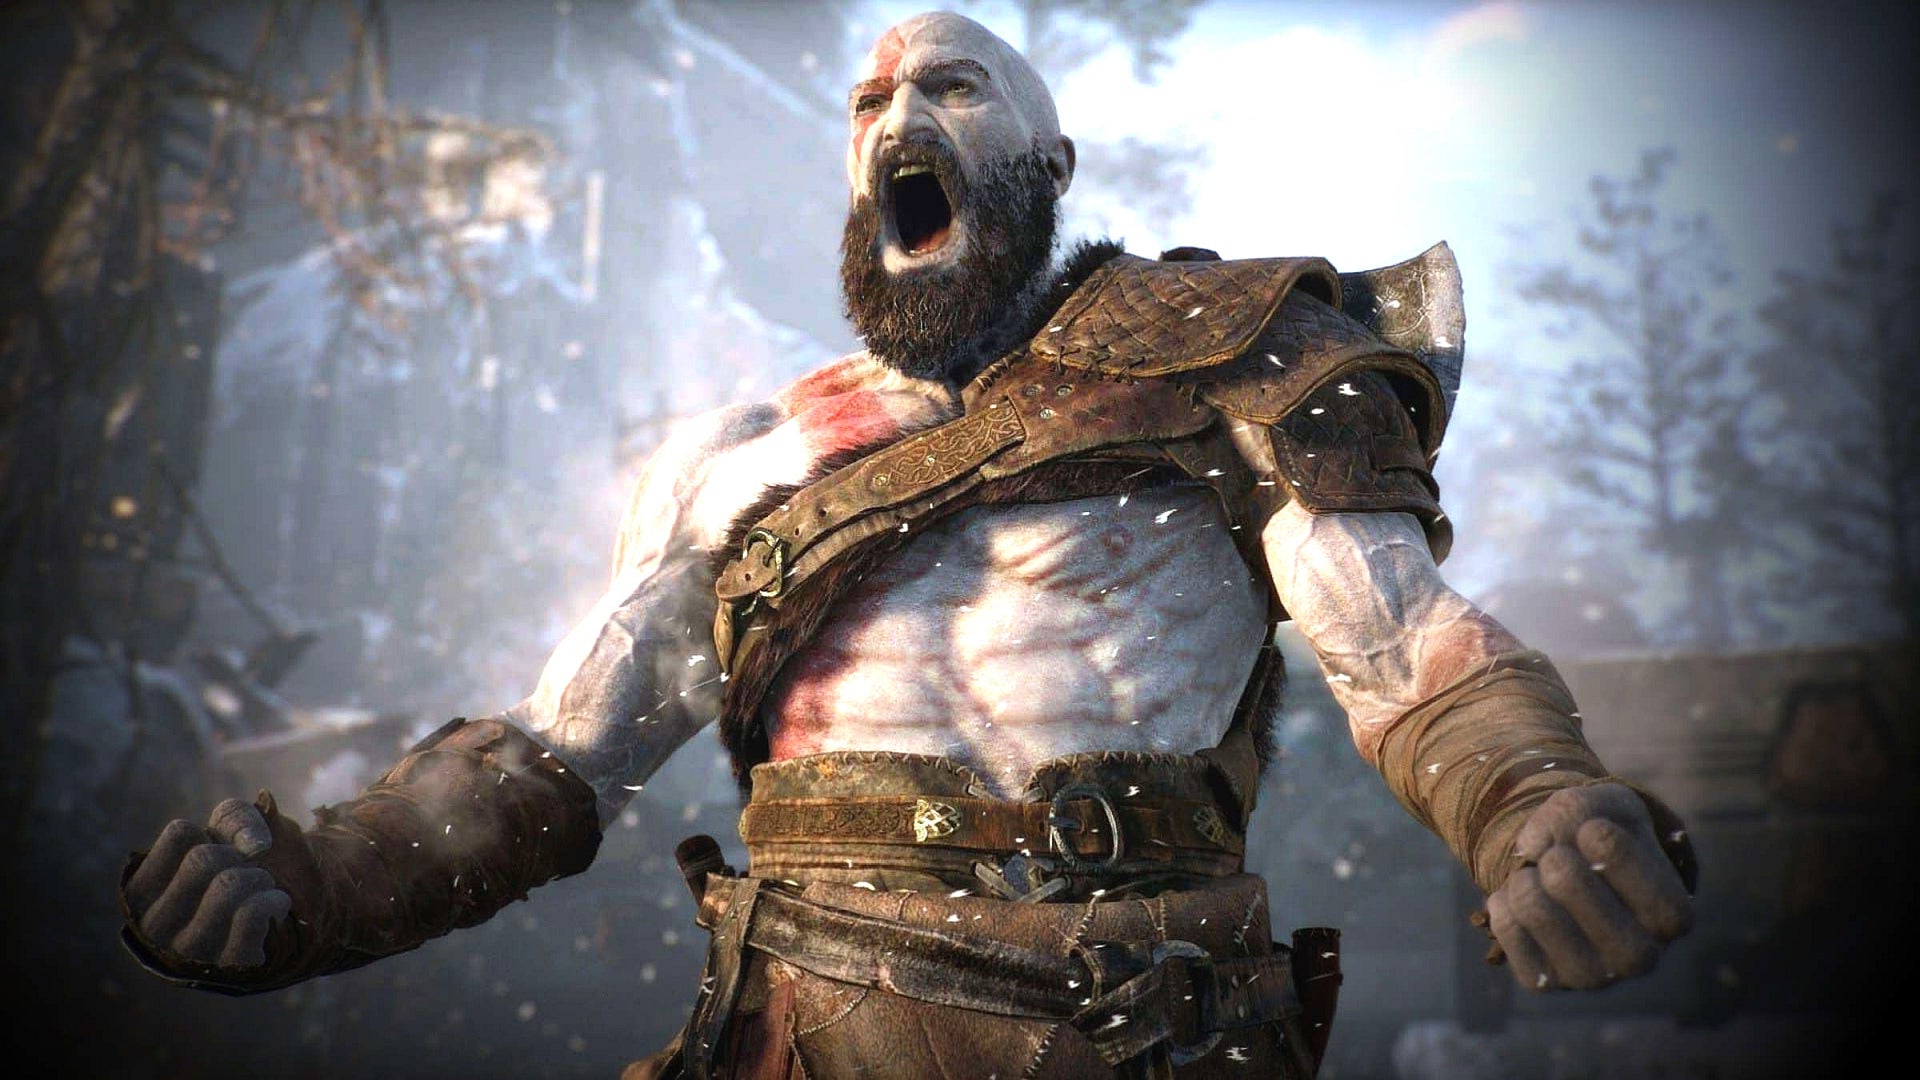 Bilder zu Kratos' Modelkarriere beginnt: God of War Ragnarök enthält jetzt den Fotomodus